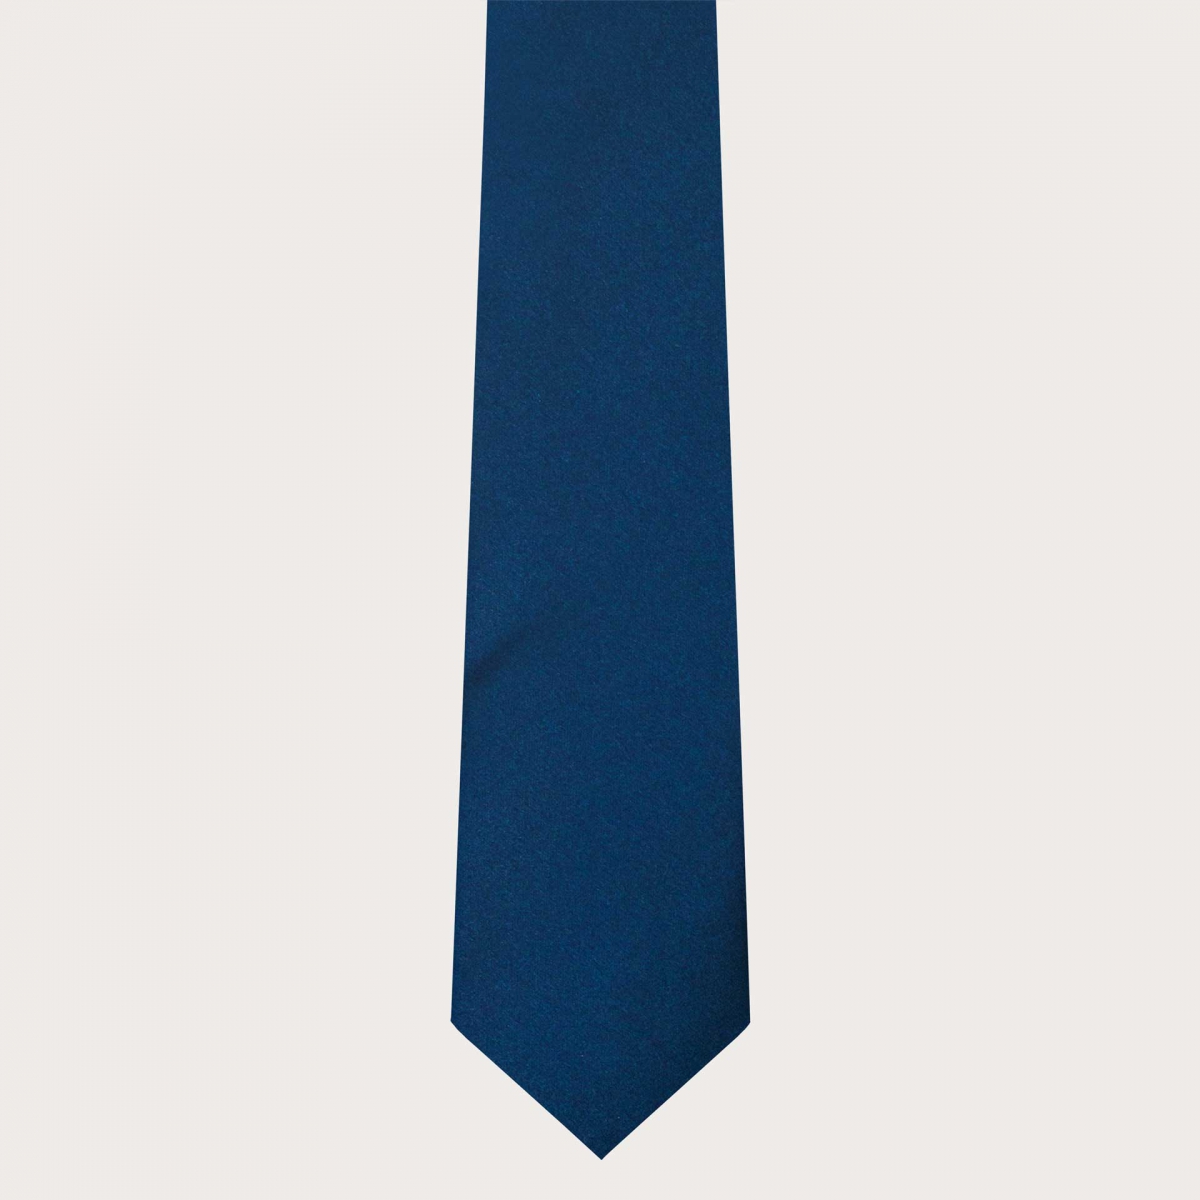 BRUCLE Corbata clásica en raso de seda azul